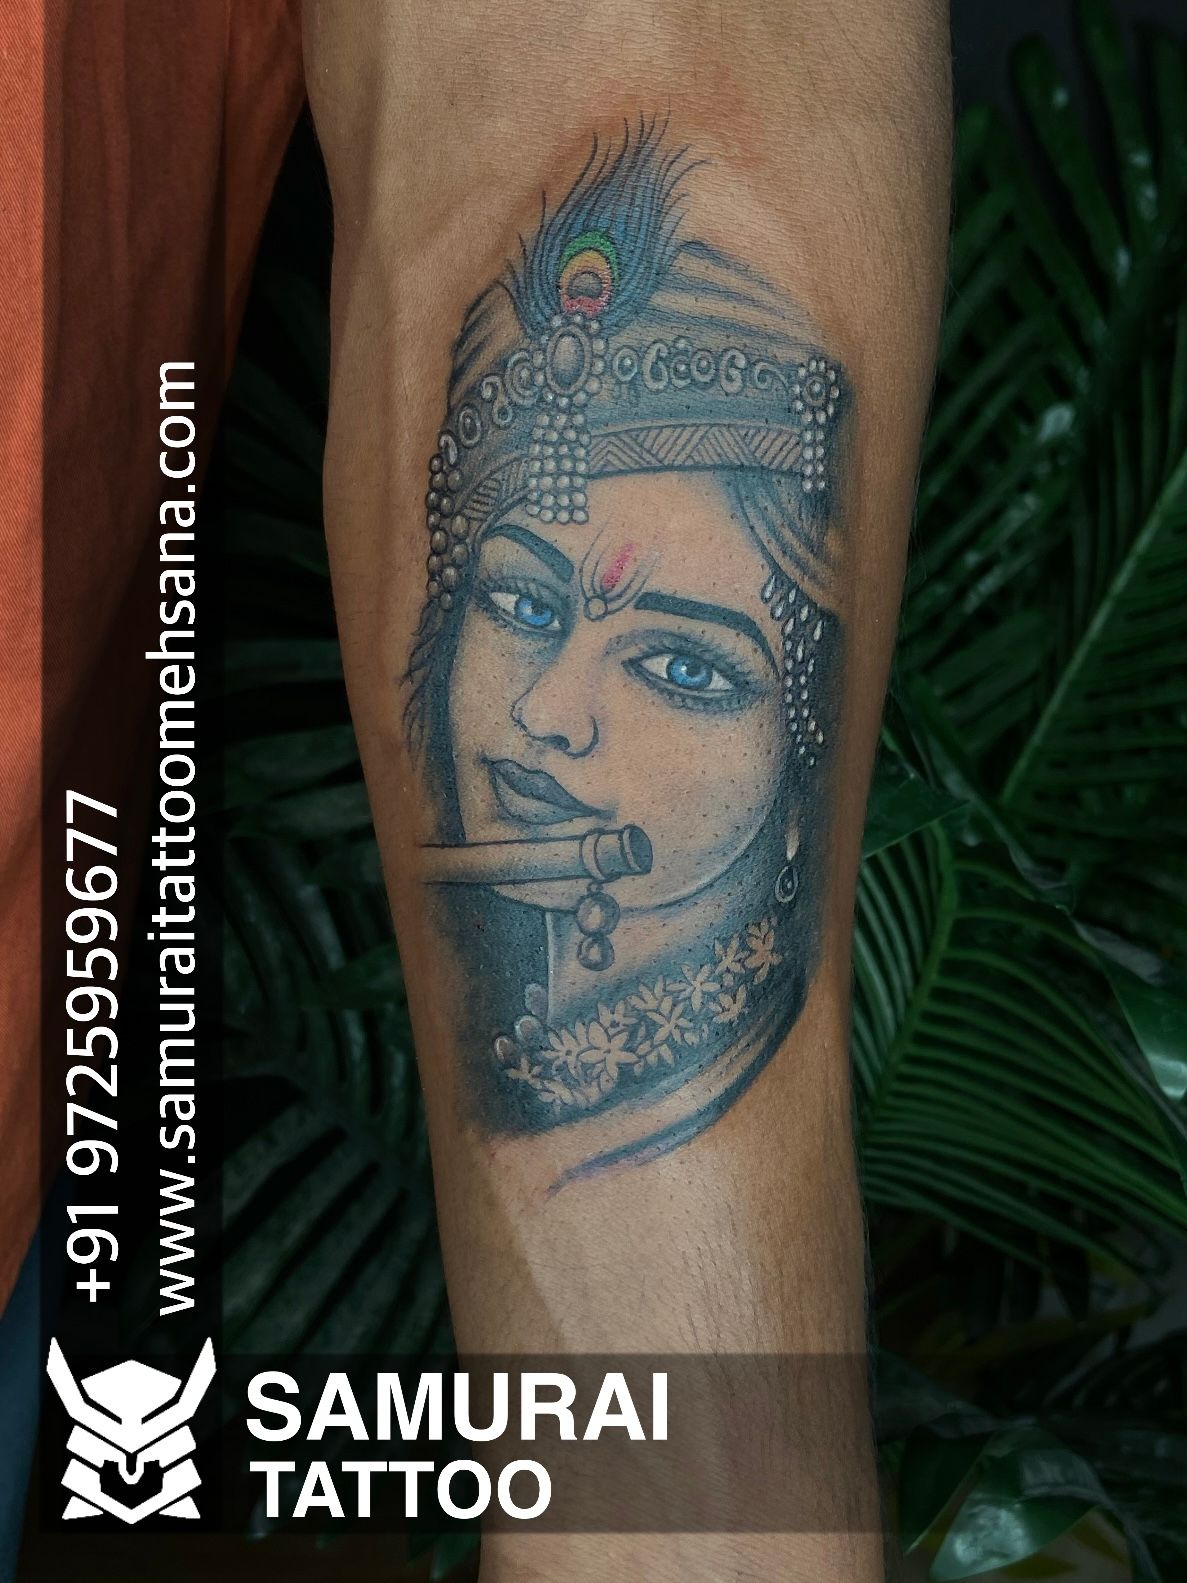 Are spiritual tattoos of Shree Krishna a Sin? - Quora